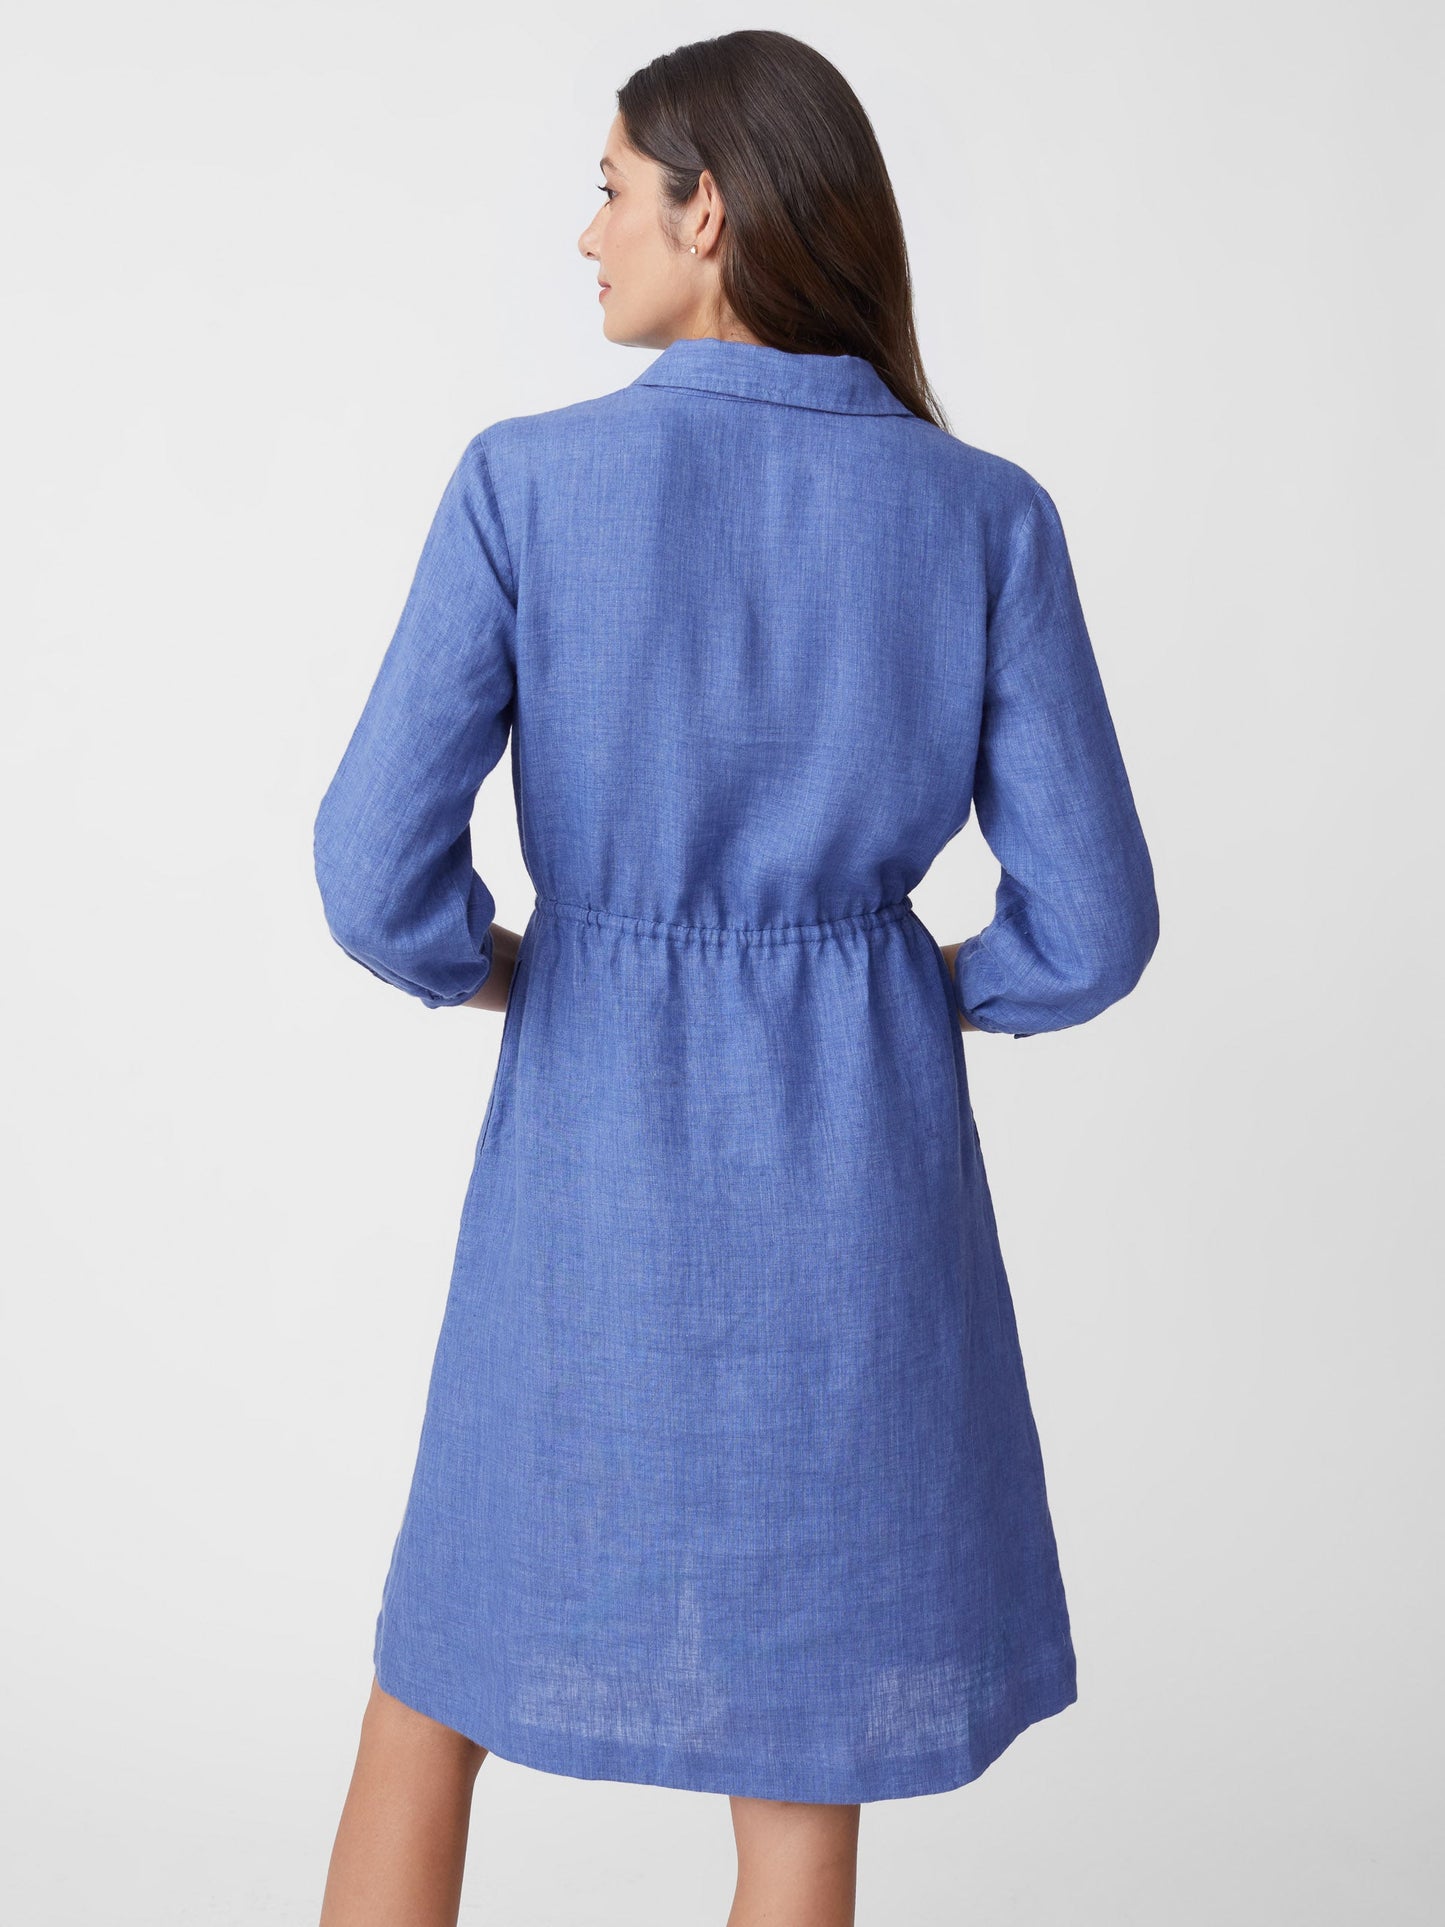 Model wears J.McLaughlin Flor Linen Dress in solid denim made with linen.